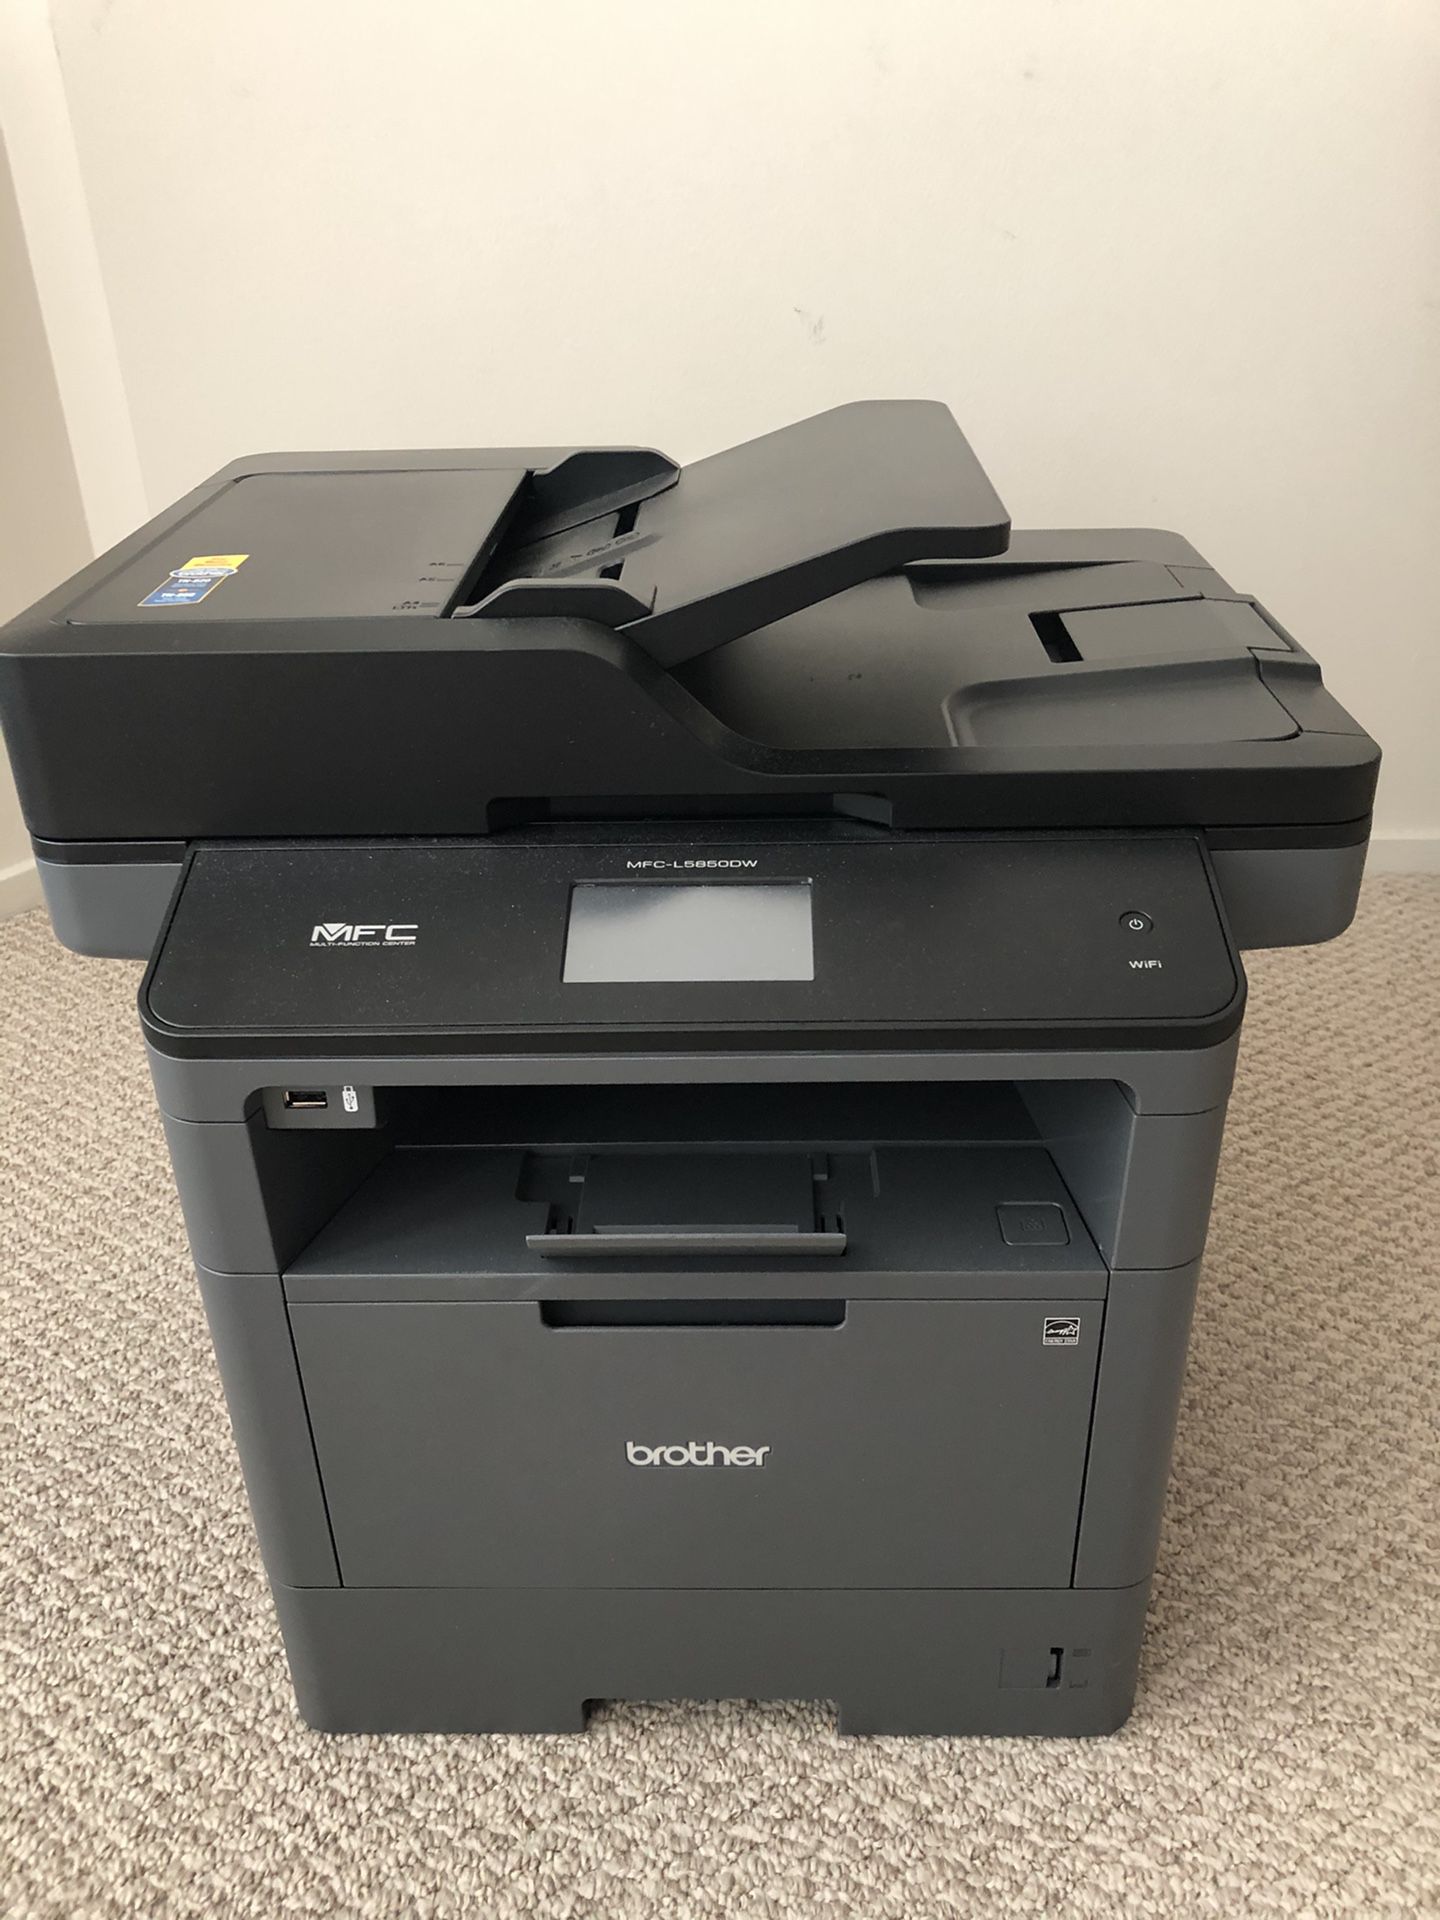 Brother multi-function center includes printer/scanner/copier model L5850DW